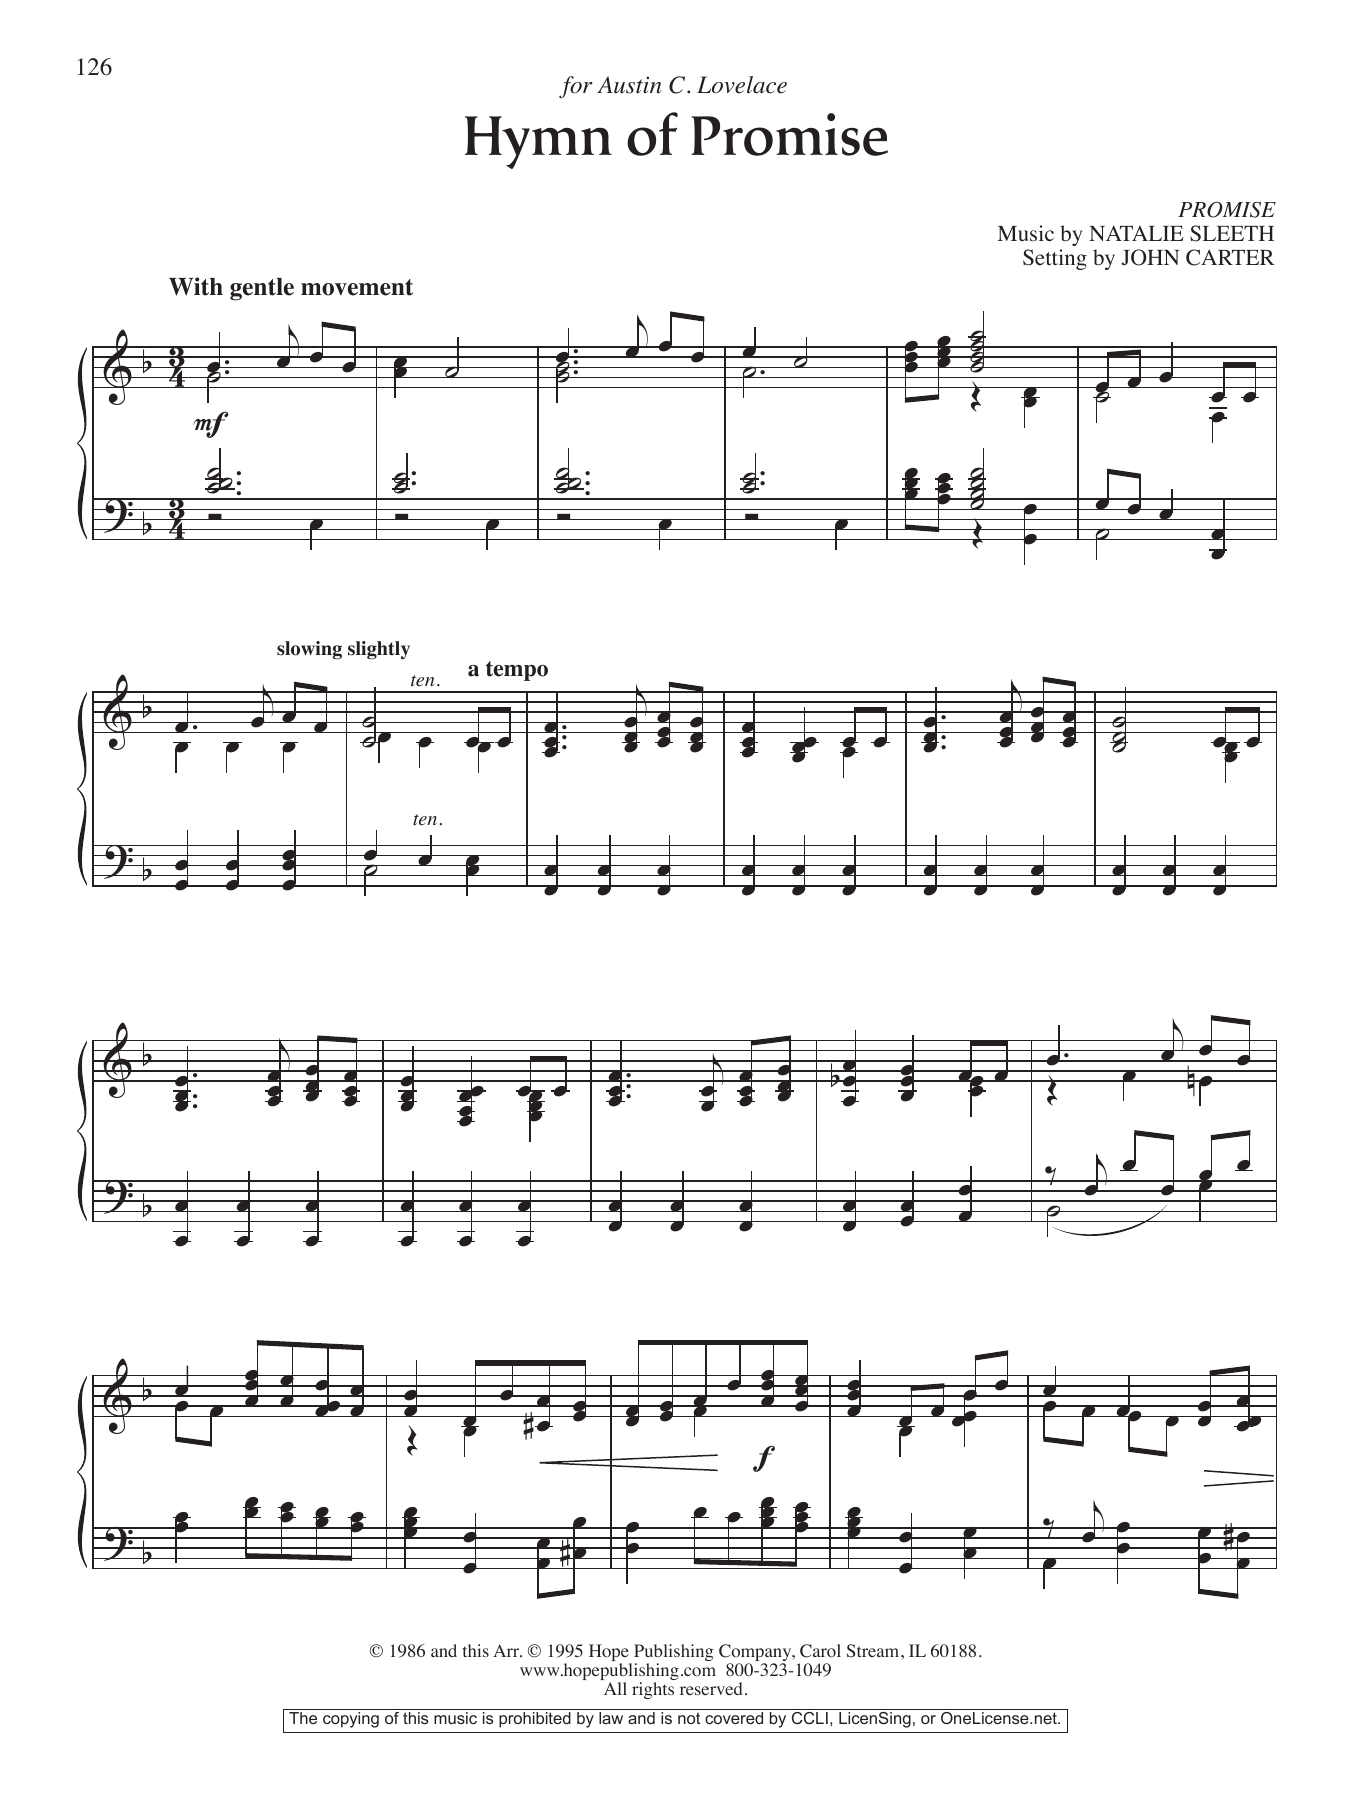 Download John Carter Hymn of Promise Sheet Music